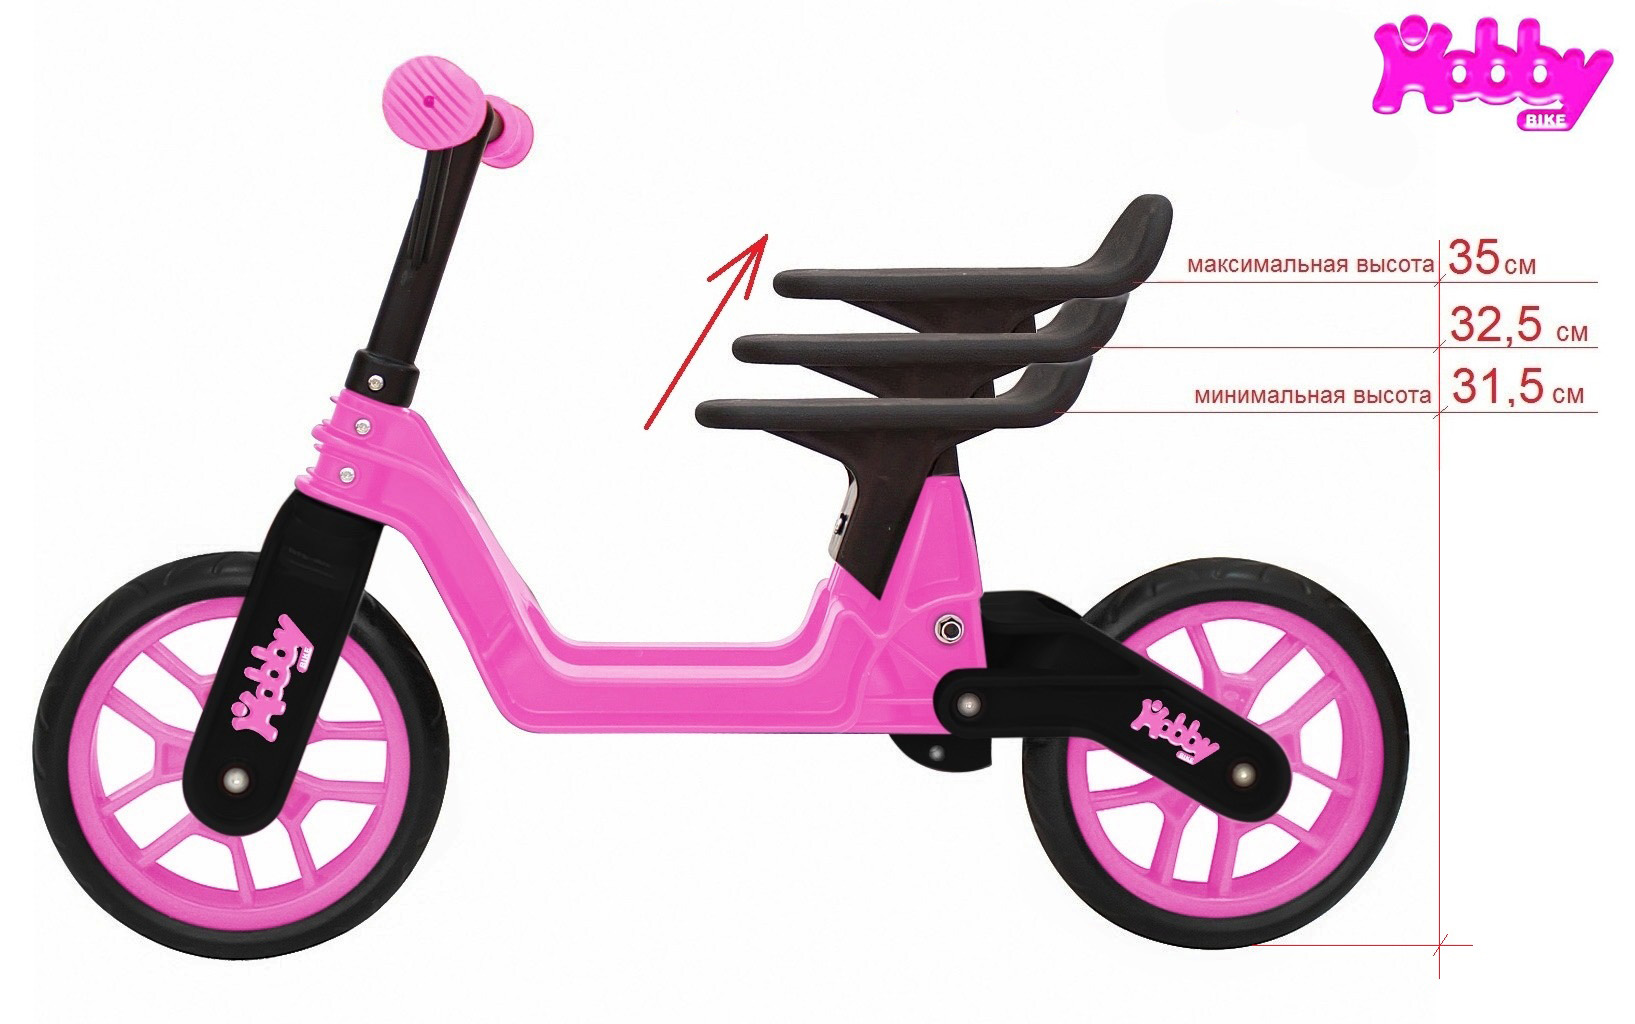 Беговел - Hobby bike Magestic, pink black  